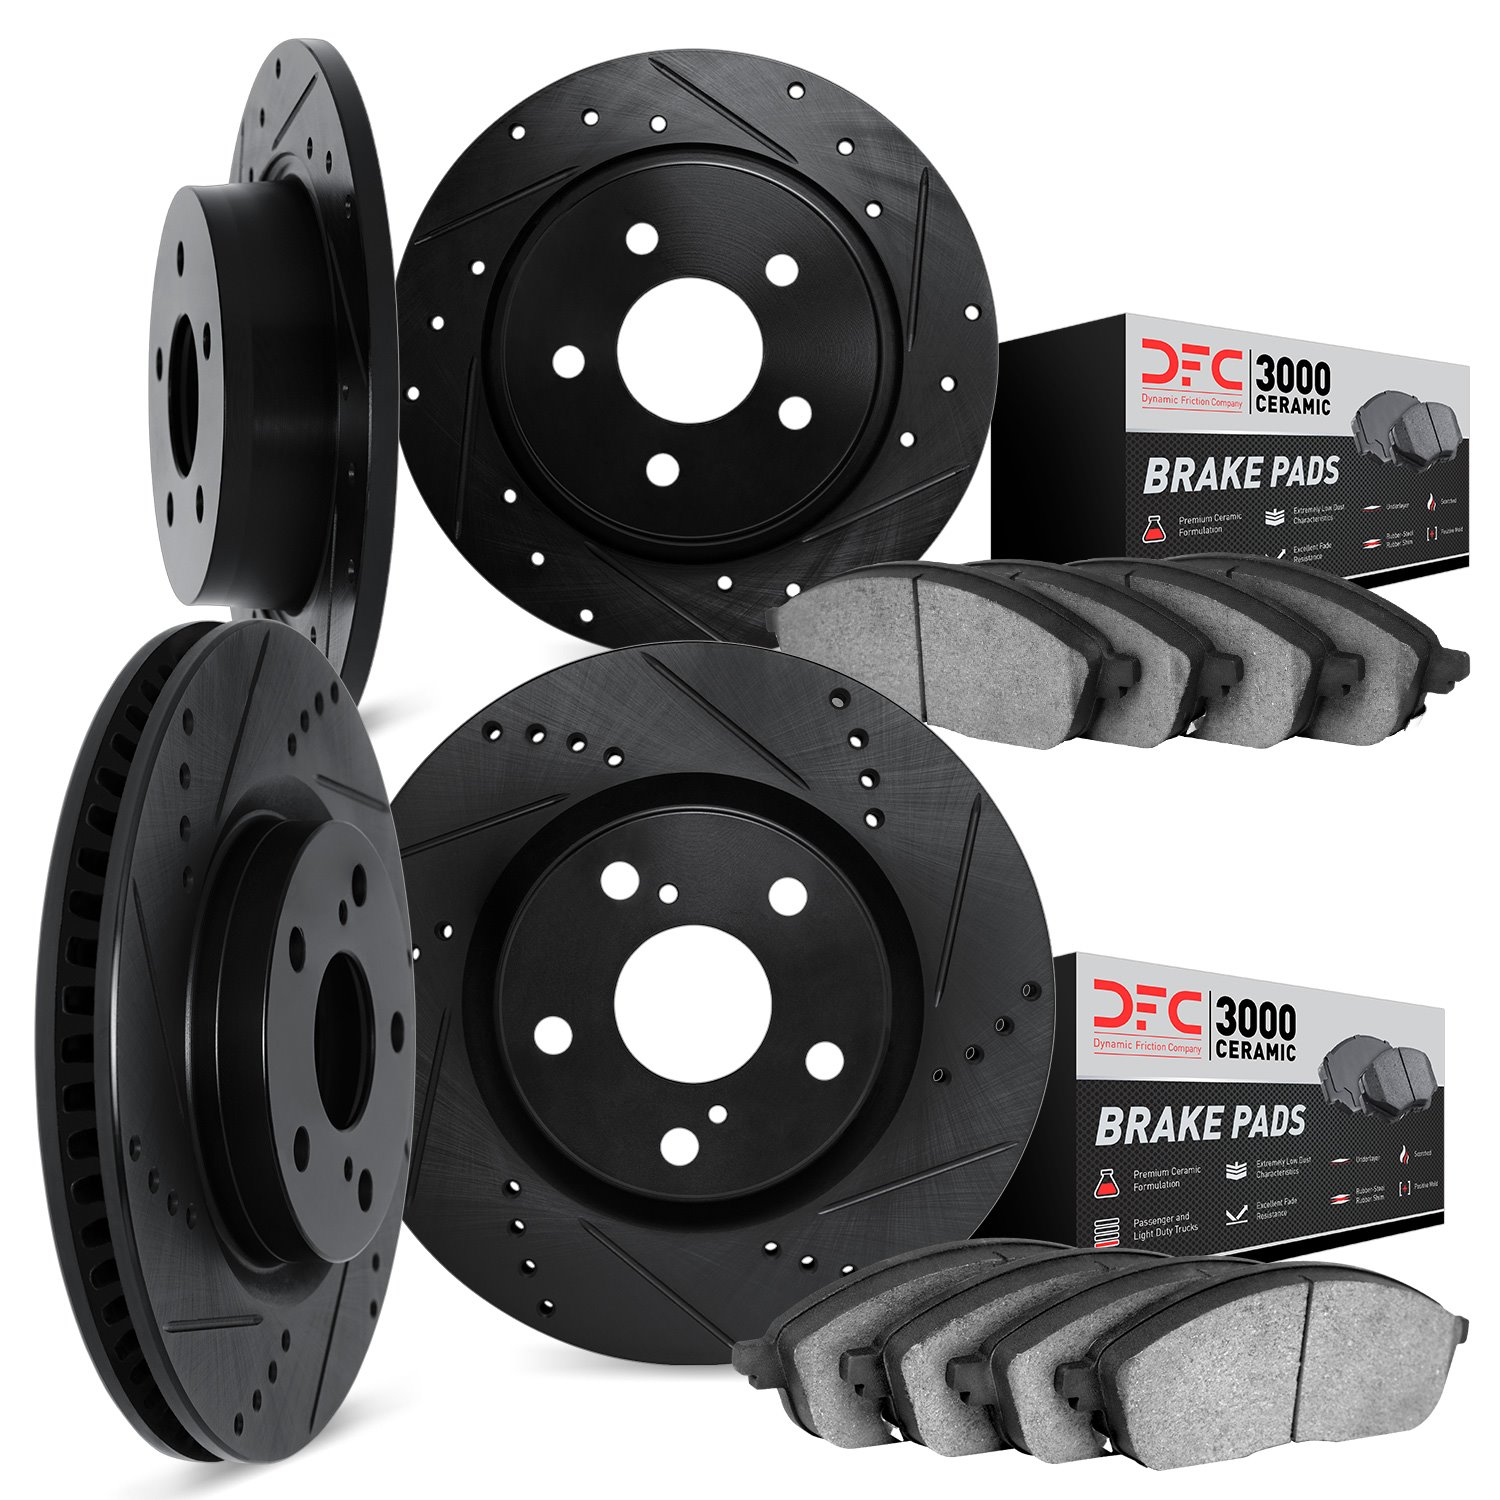 8304-20005 Drilled/Slotted Brake Rotors with 3000-Series Ceramic Brake Pads Kit [Black], 2001-2004 Multiple Makes/Models, Positi